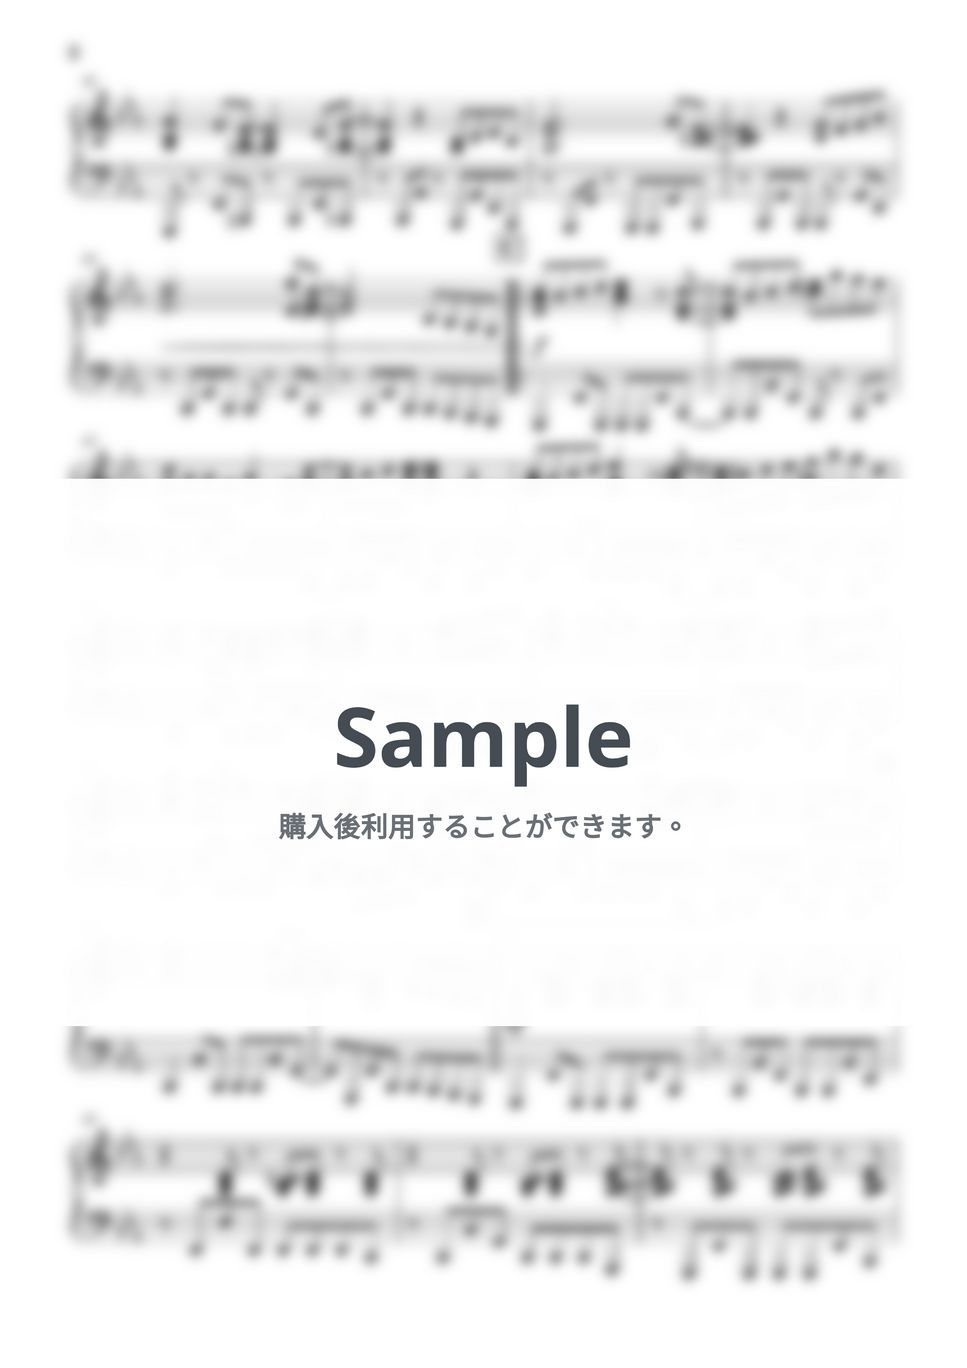 藤井 風 - 花 (ピアノ) by PiaFlu